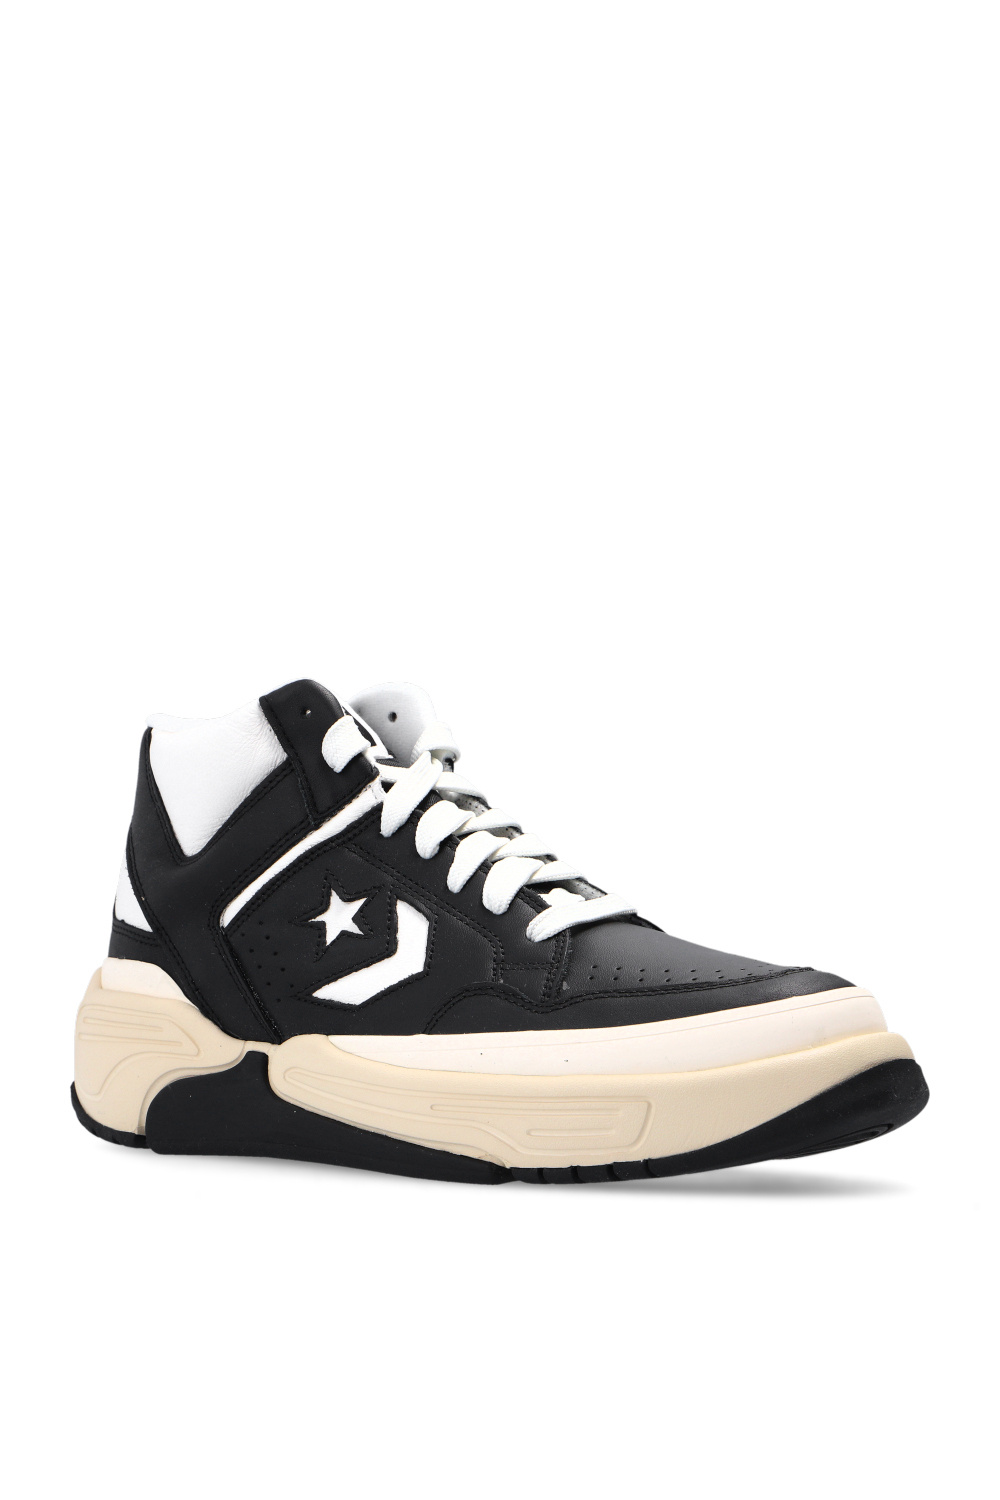 Disco Ortodoxo Arco iris Black 'Weapon CX Mid' sneakers Converse - Converse black One Star MC18  sneakers - IetpShops Spain